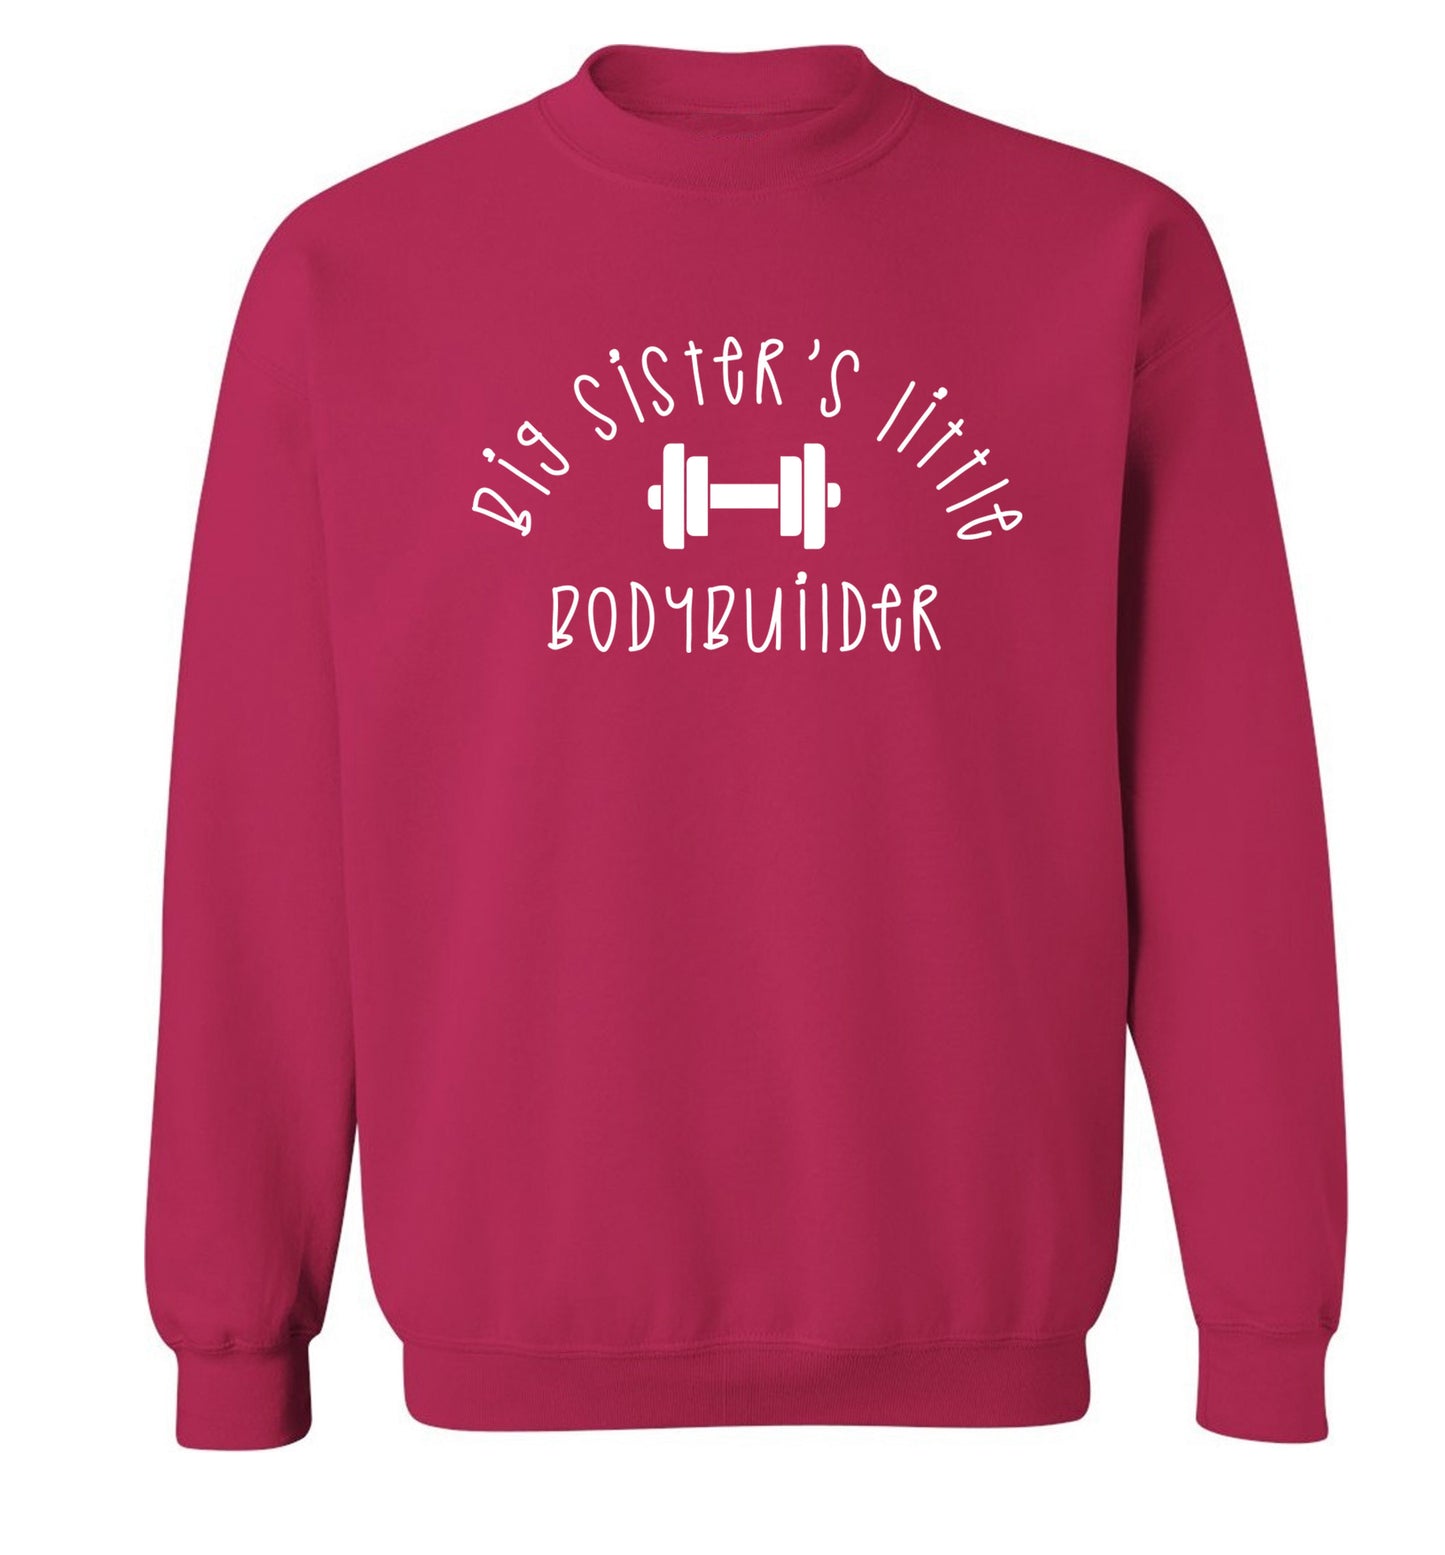 Big sister's little bodybuilder Adult's unisex pink Sweater 2XL